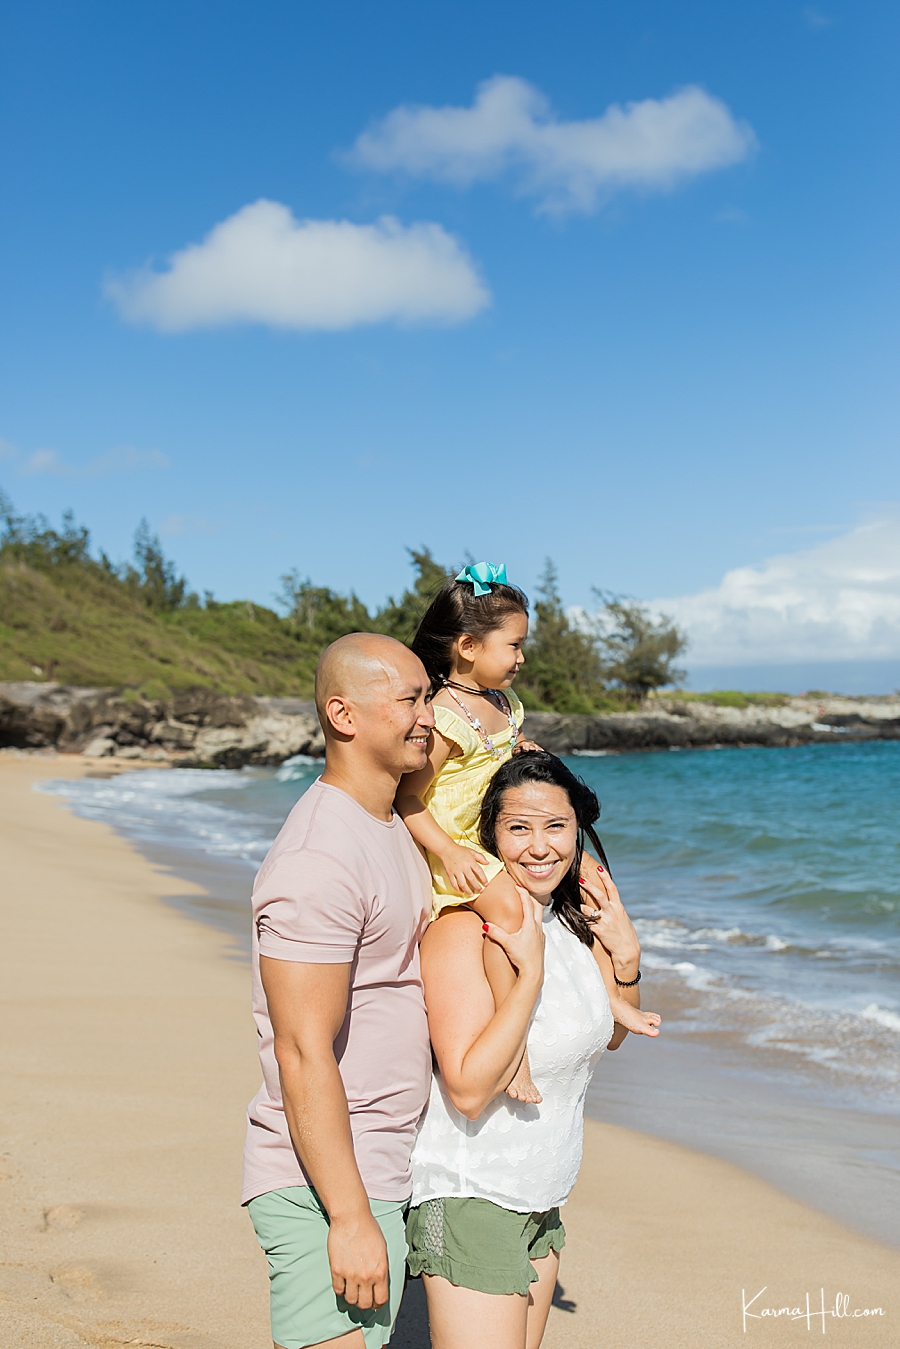 Maui beach Portrait locations
